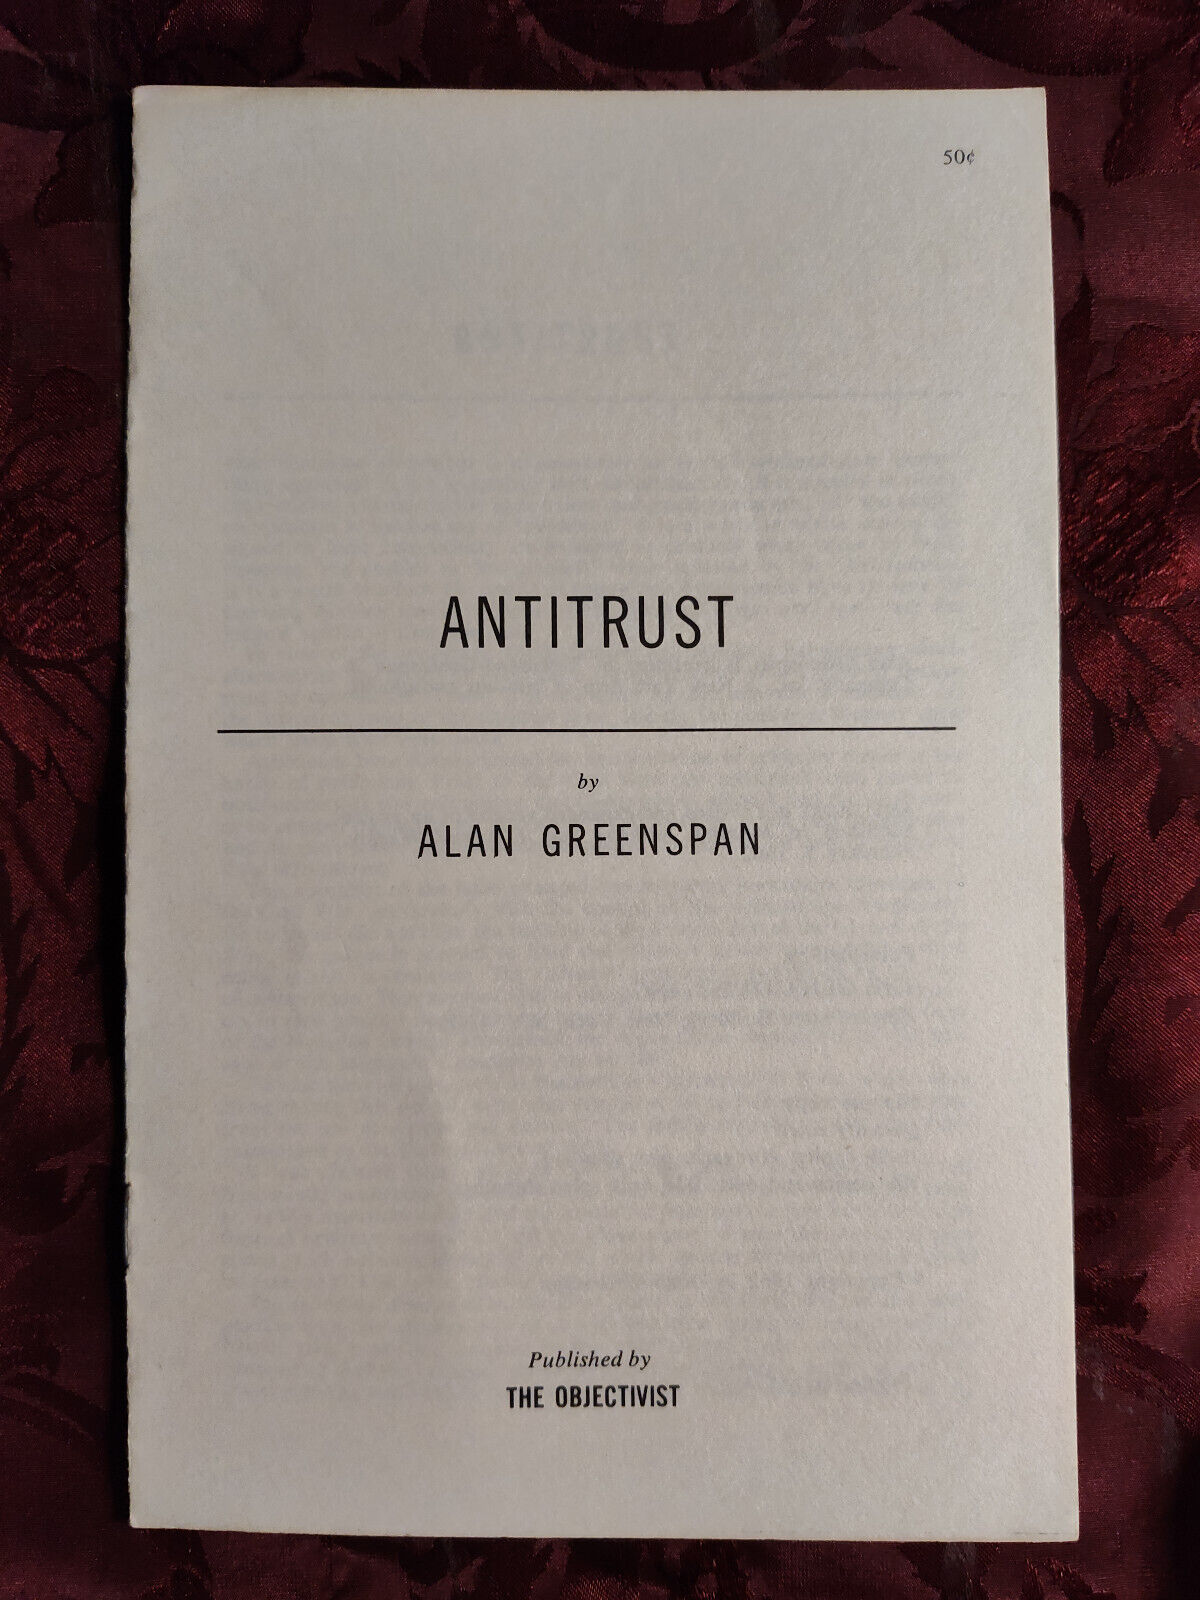 RARE Ayn Rand Objectivist Pamphlet ANTITRUST Alan Greenspan